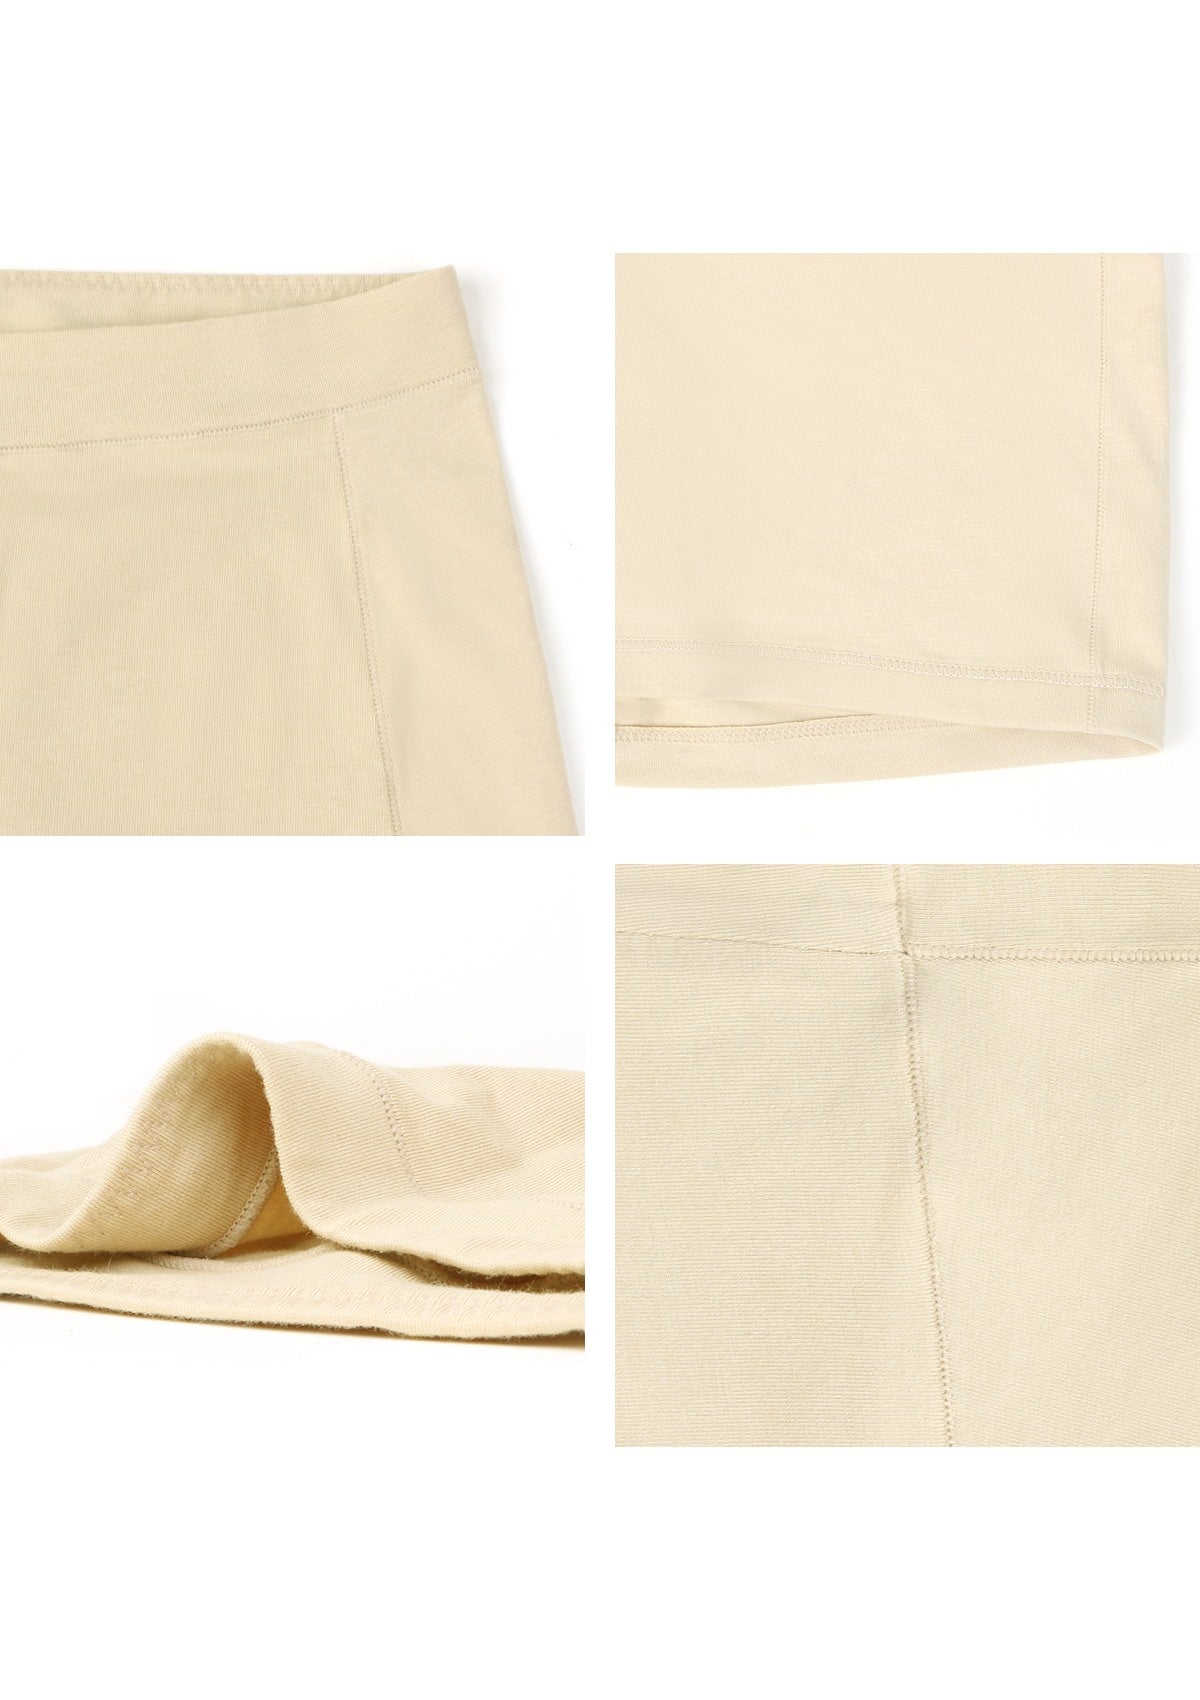 All-Day Comfort High-Rise Cotton Boyshorts Underwear 3 Pack - S / Black+White+Beige